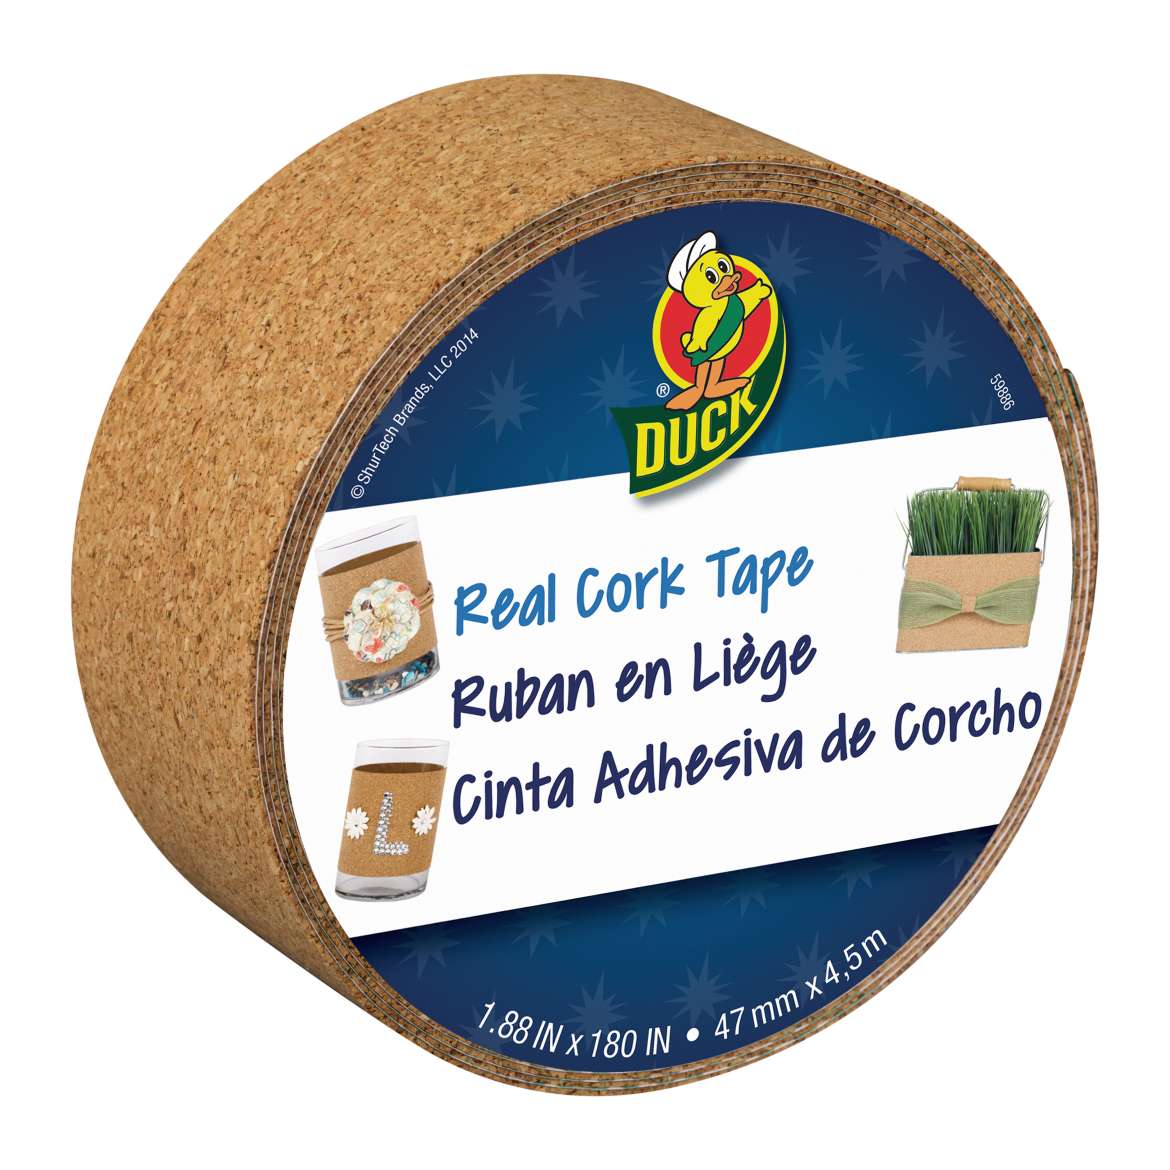 Real Cork Tape